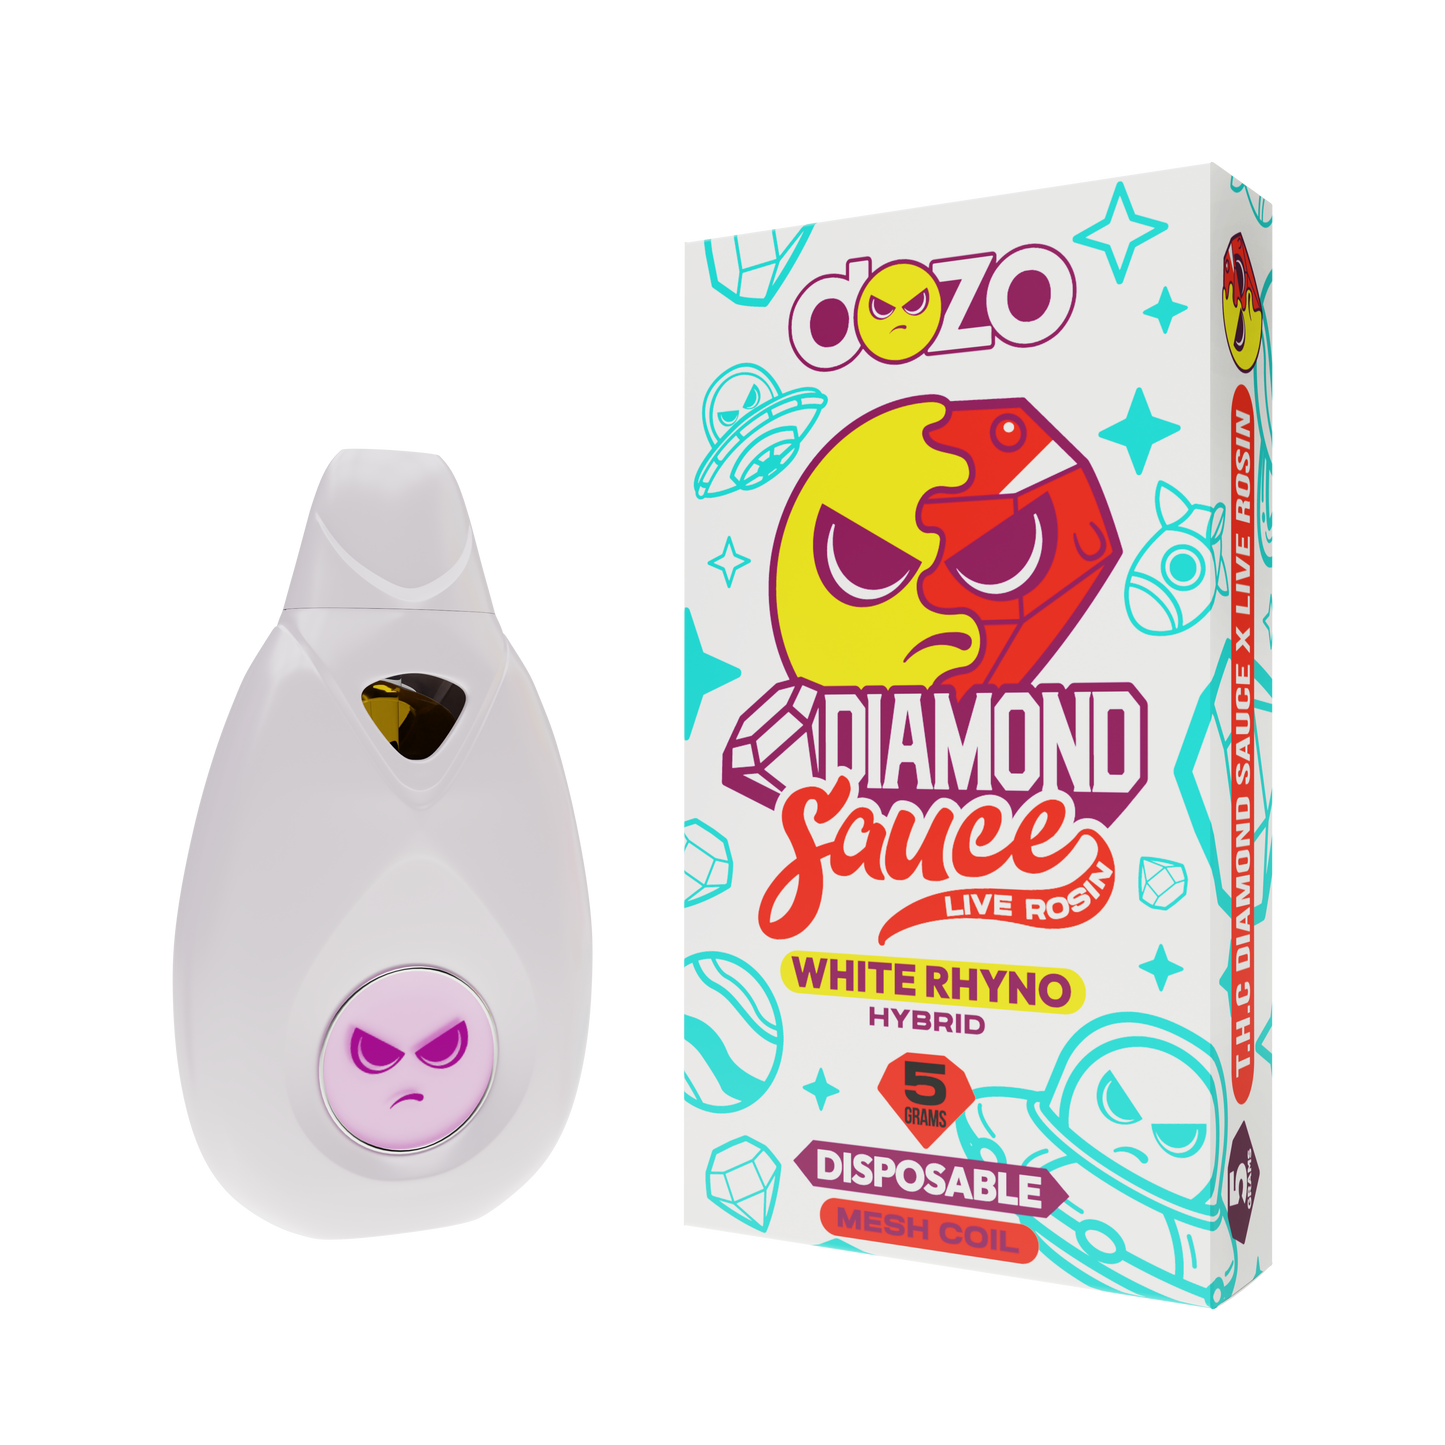 Diamond Sauсe Disposable 5g | White Rhyno (Hybrid)